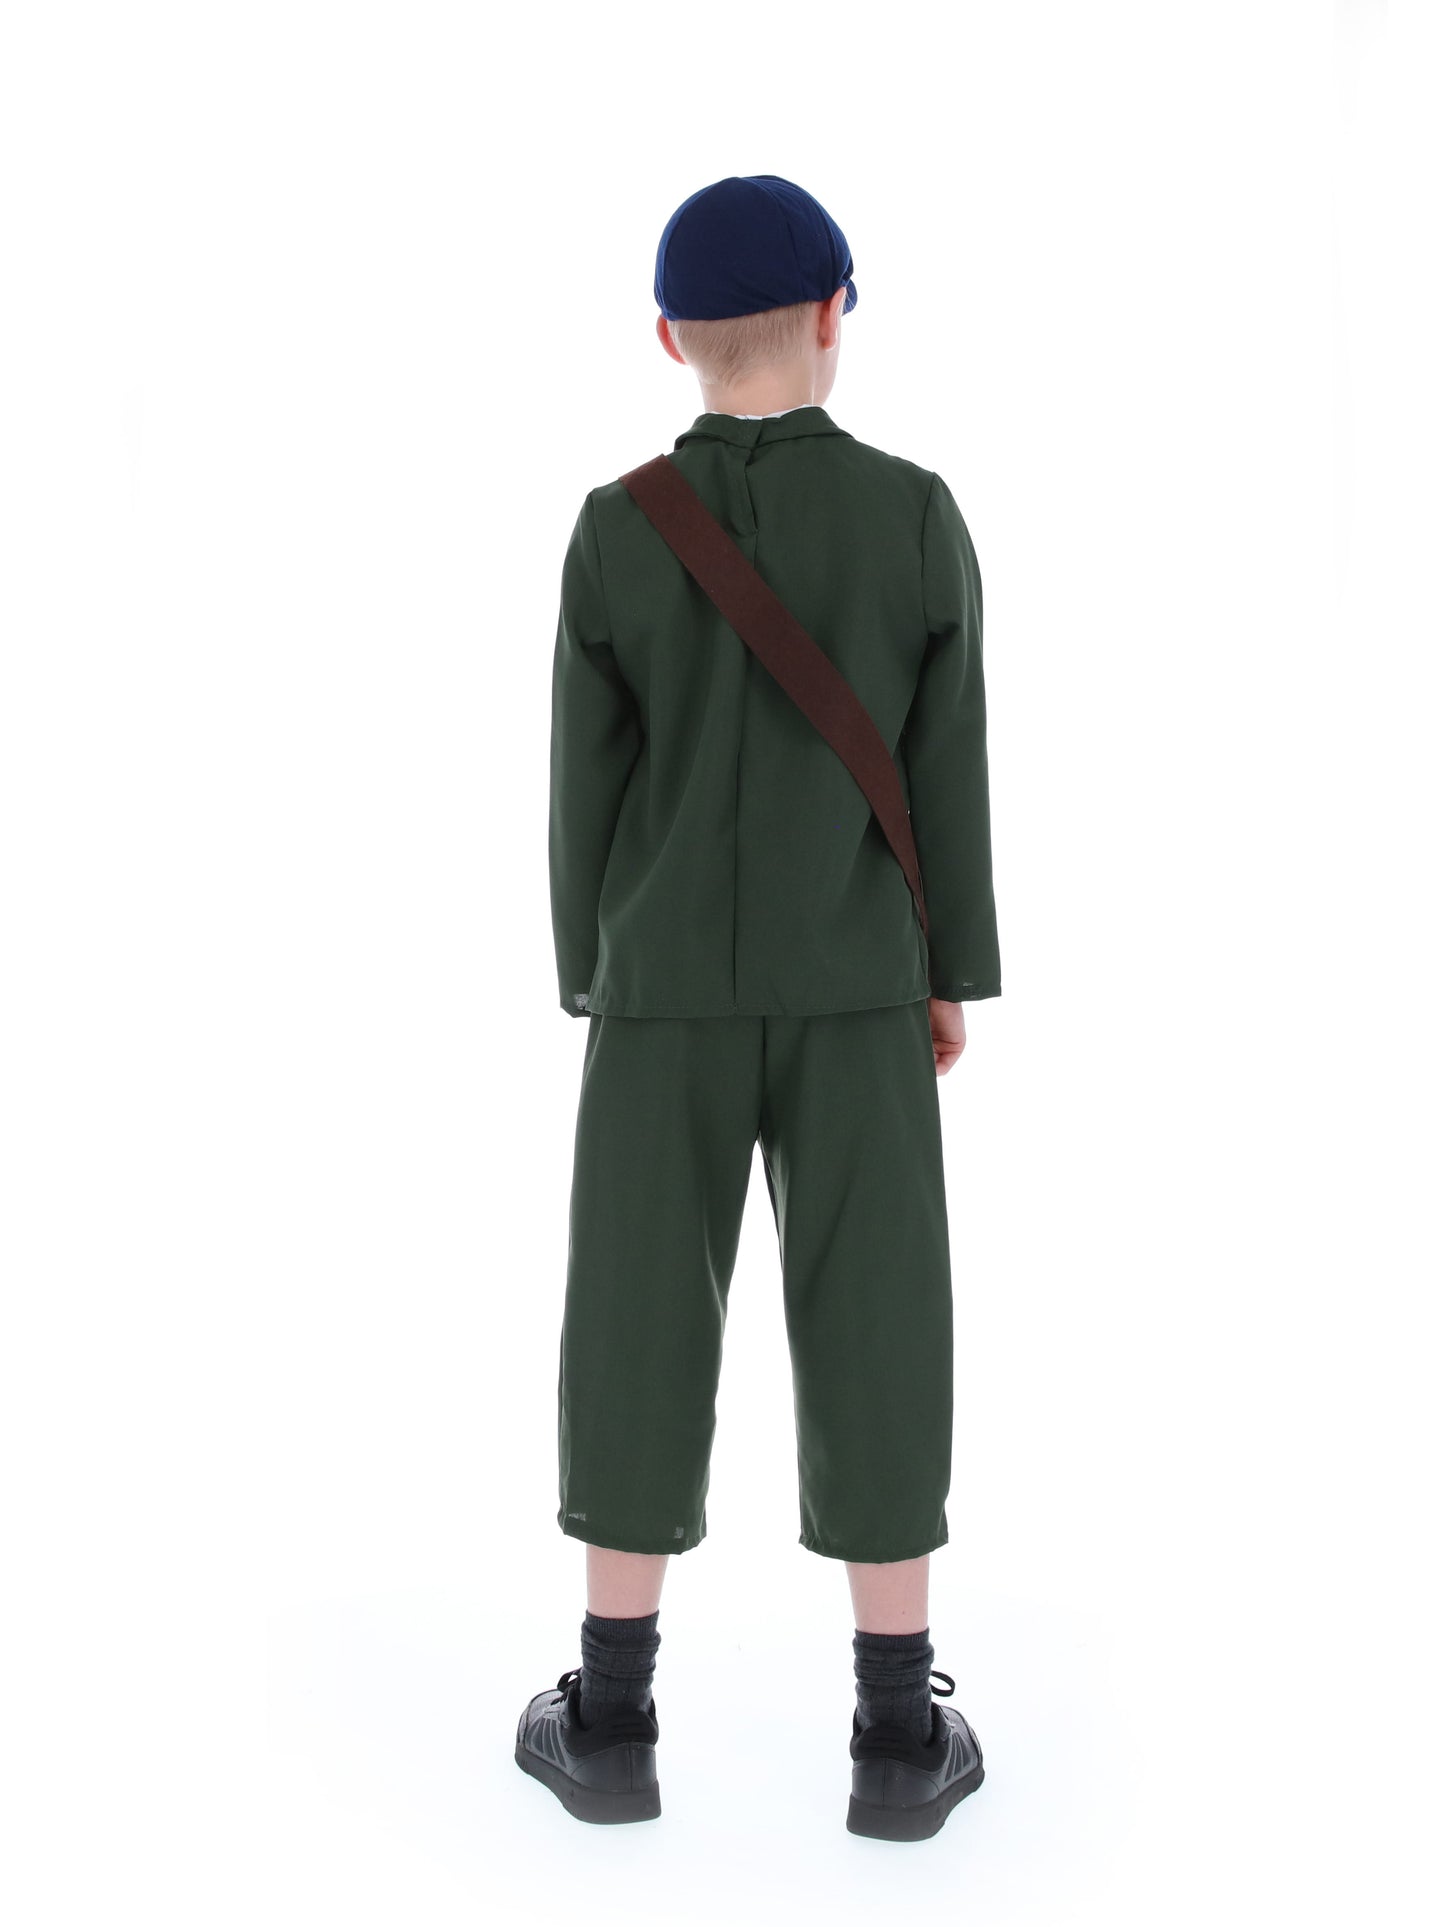 World War II Evacuee Boy Costume